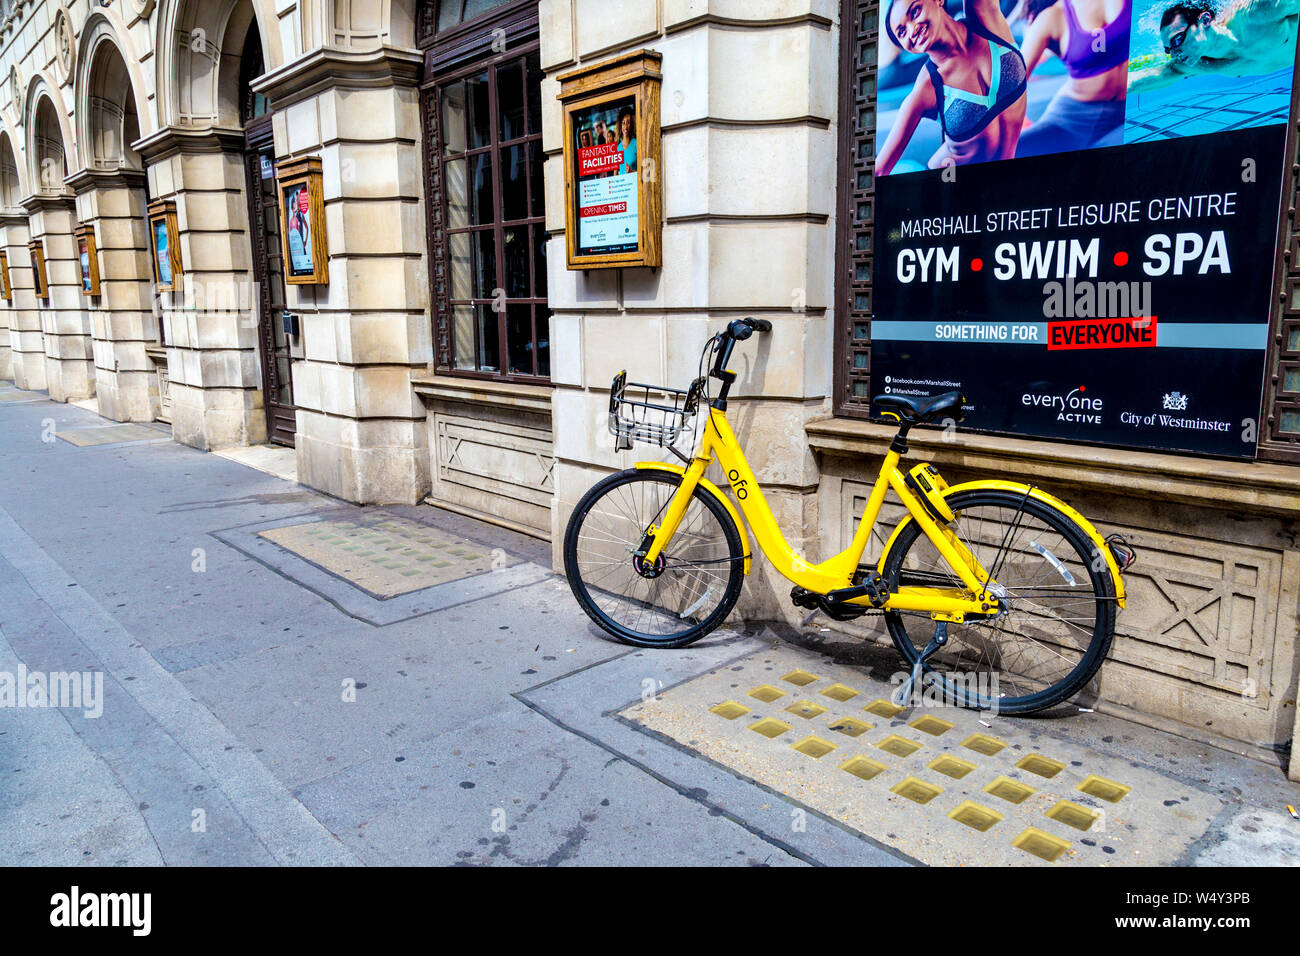 Régimen de alquiler amarillo dockless ofo bicicleta aparcado en la calle, Londres, Reino Unido. Foto de stock